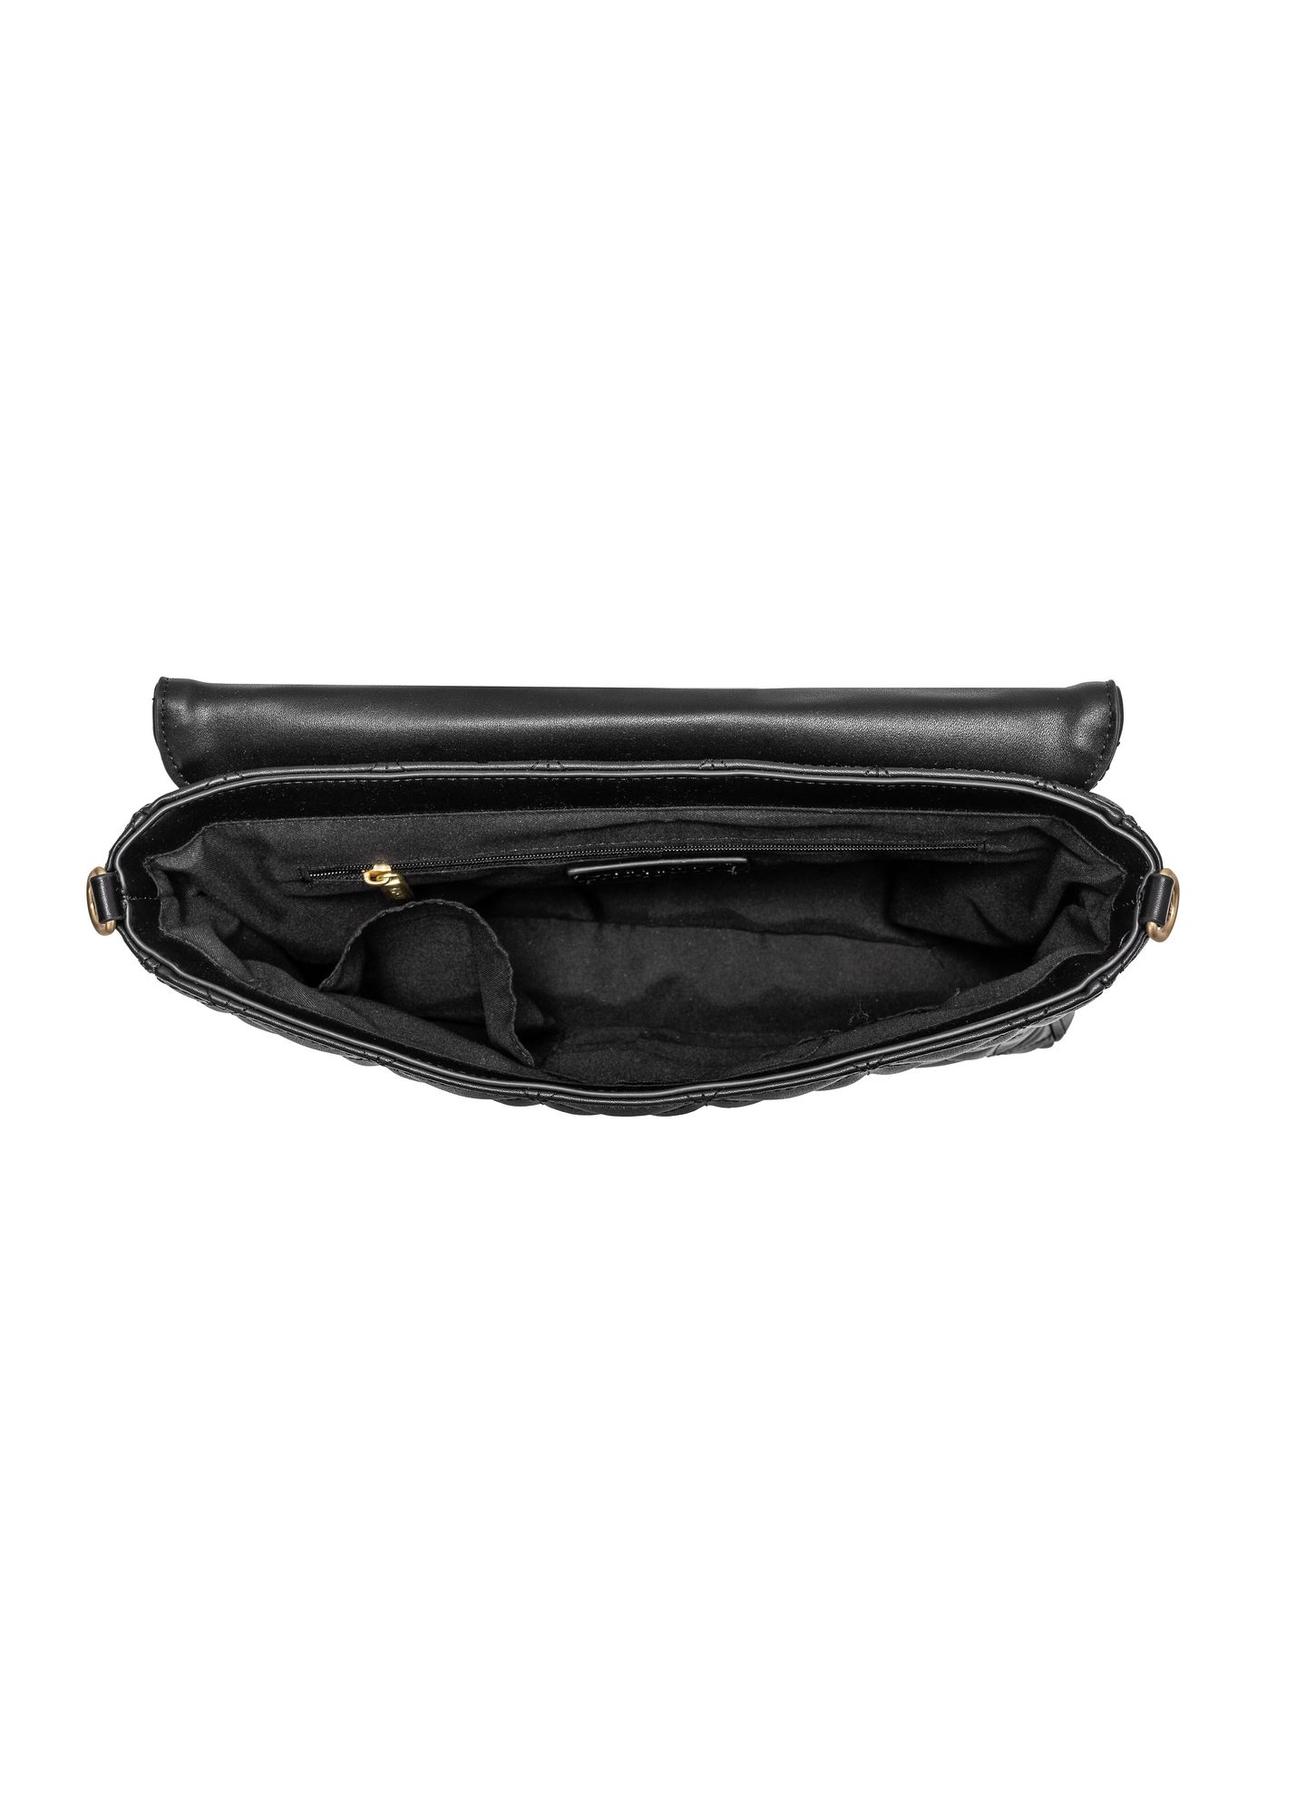 Czarna pikowana torebka damska TOREC-0849-99(Z23)